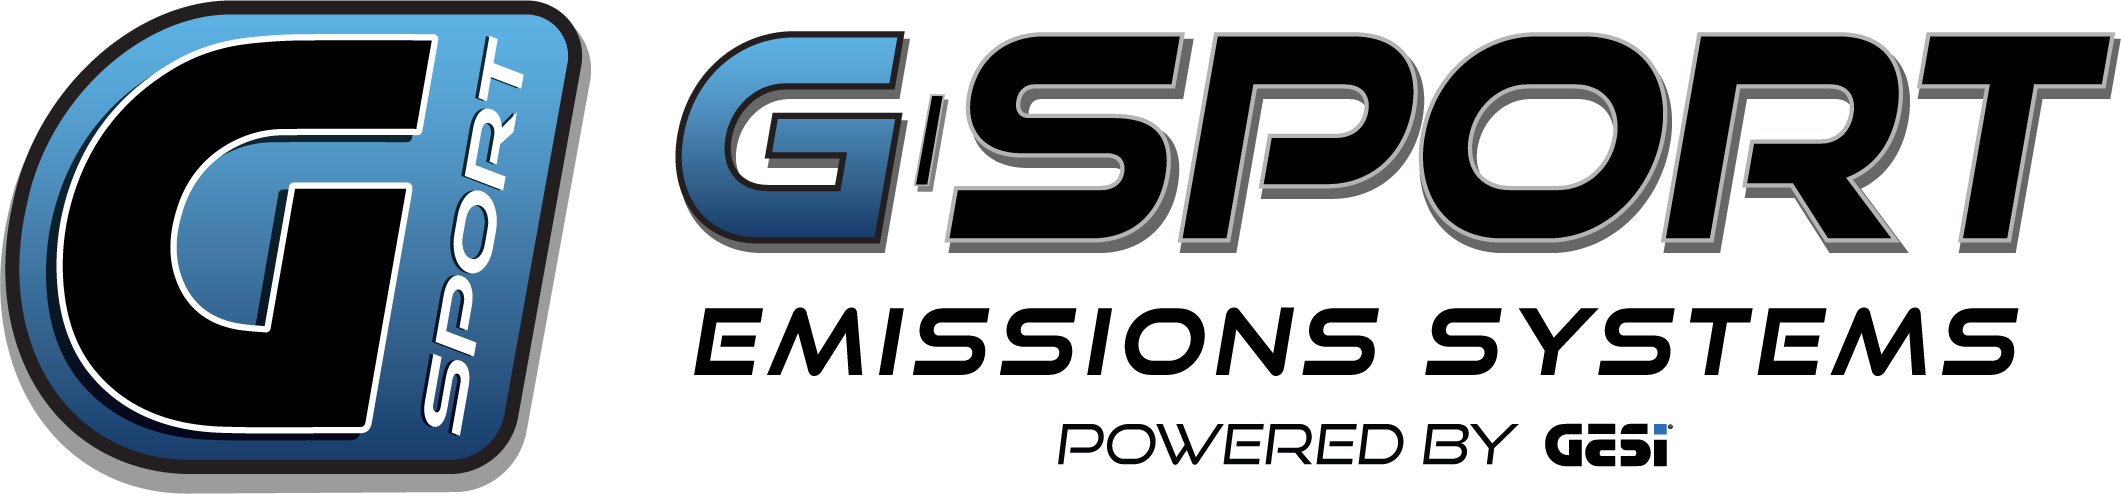 G-sport logo